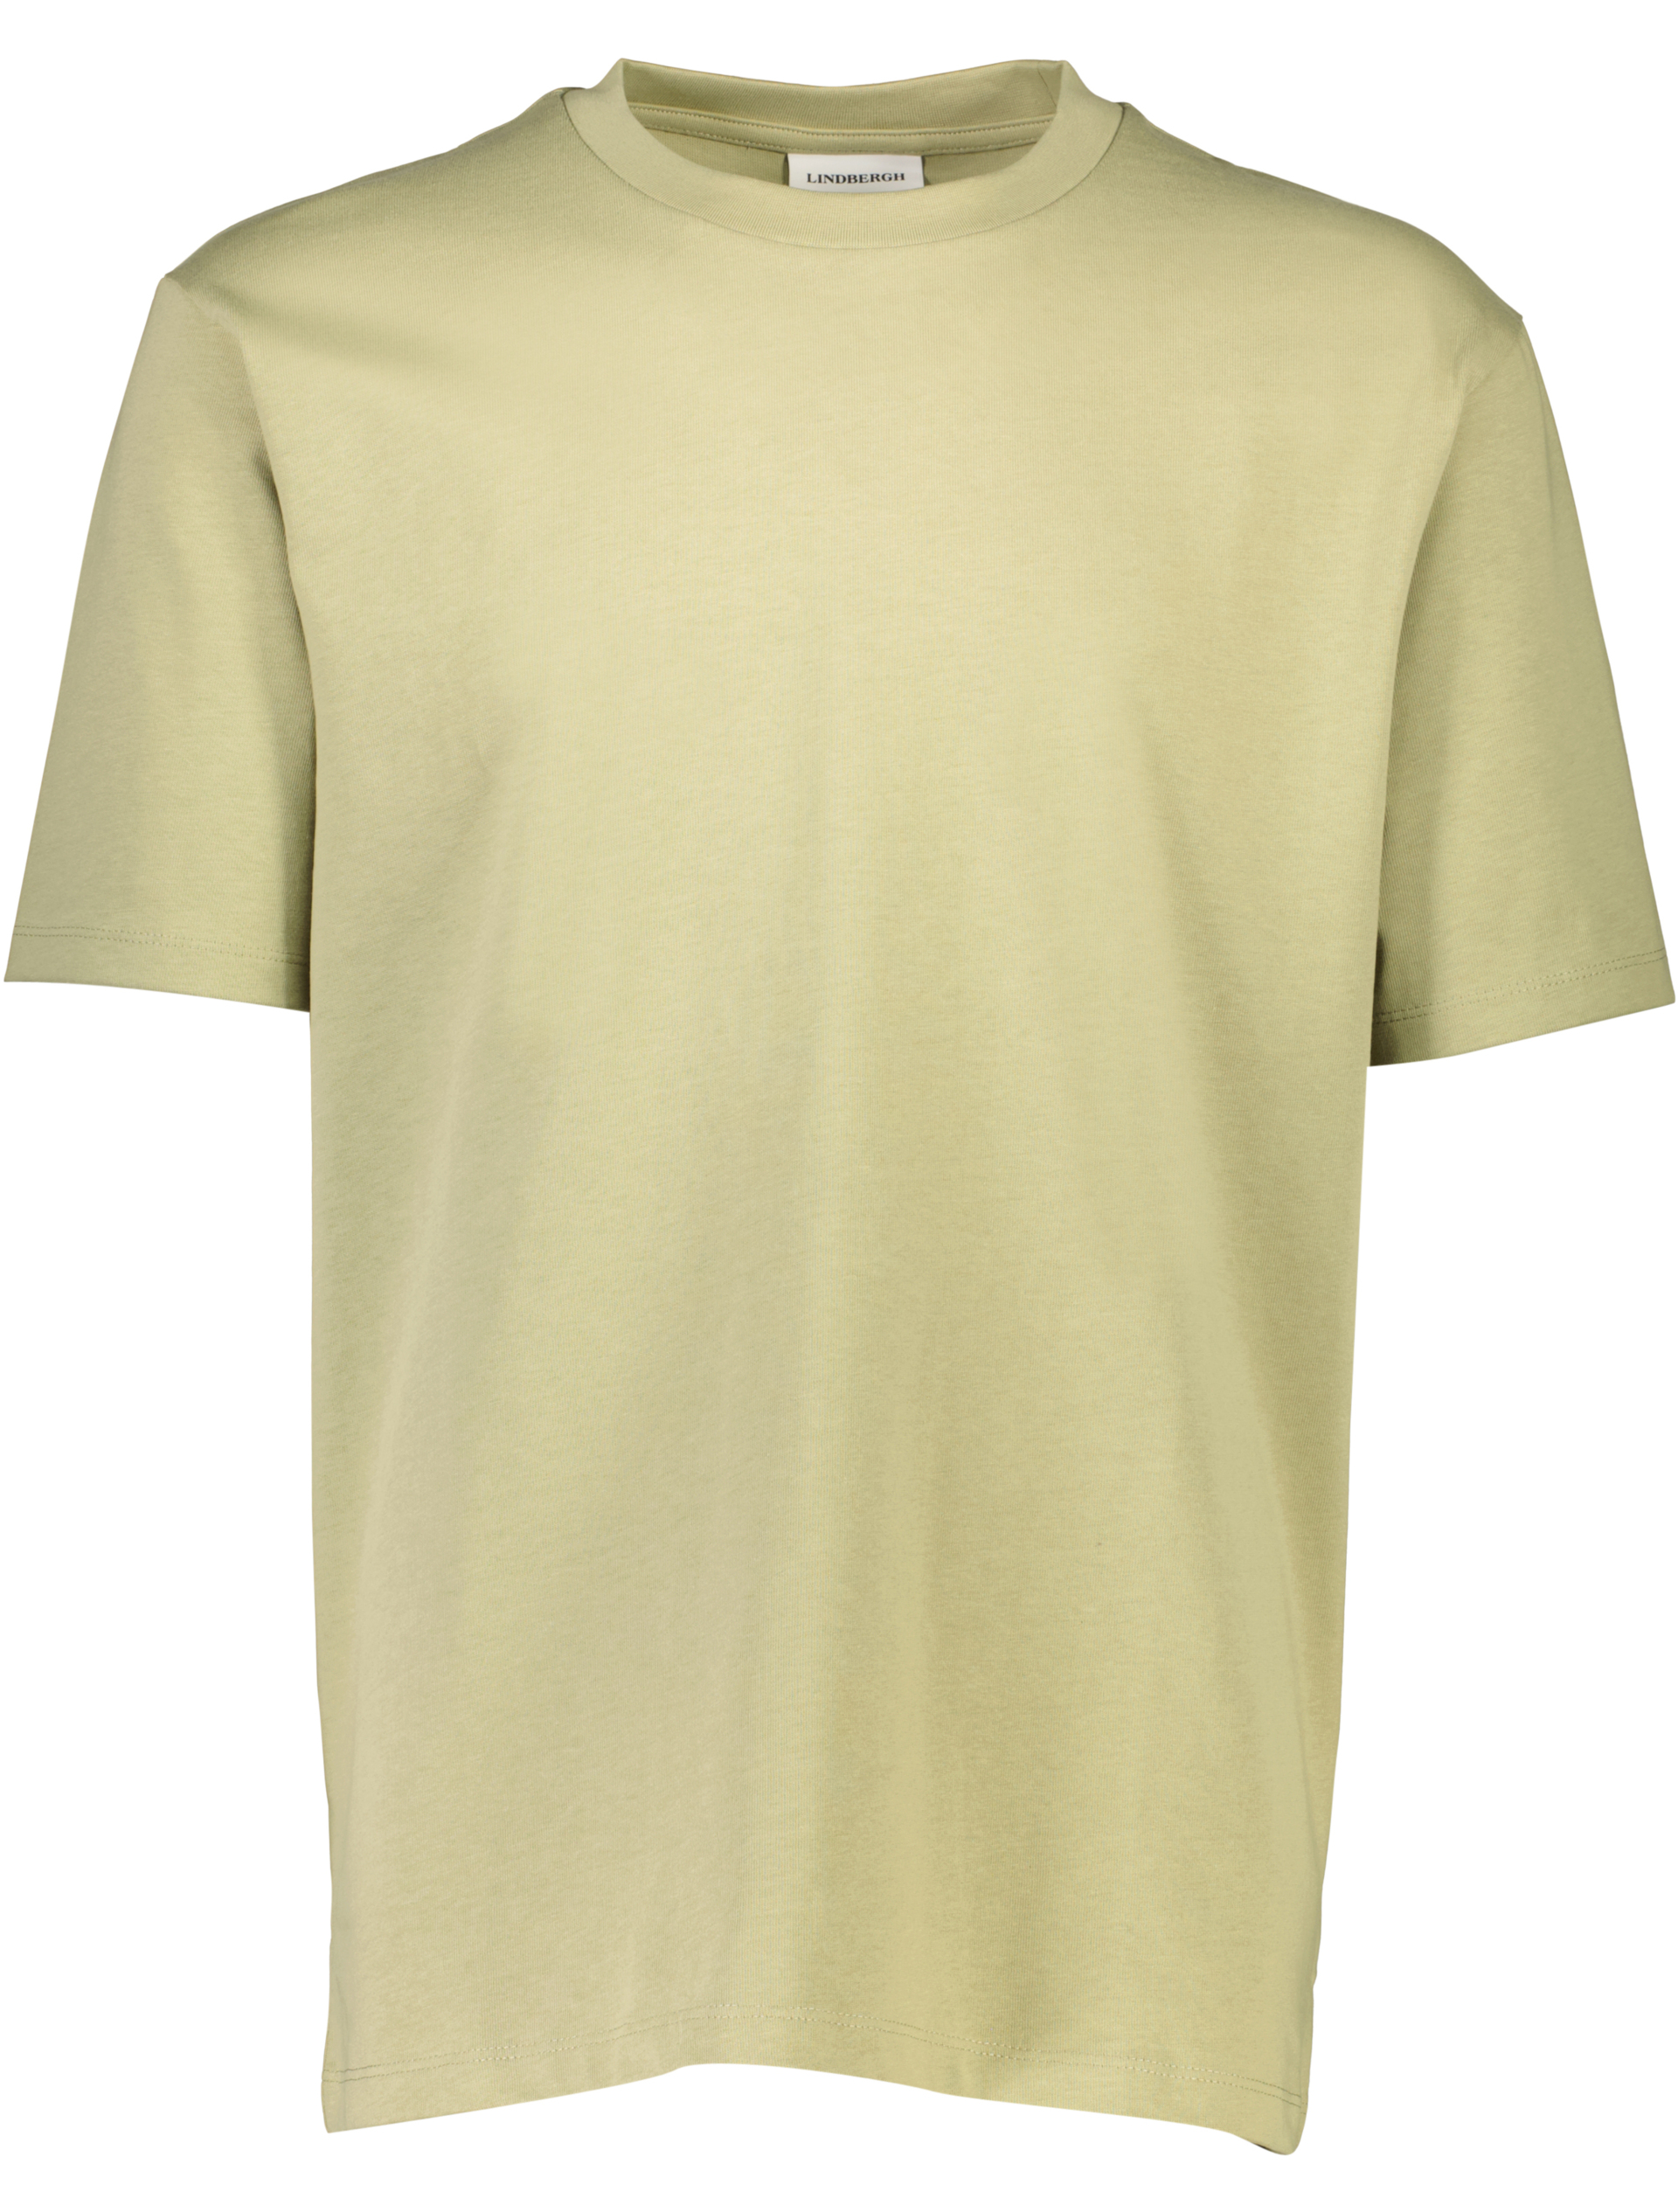 Lindbergh T-shirt groen / lt army